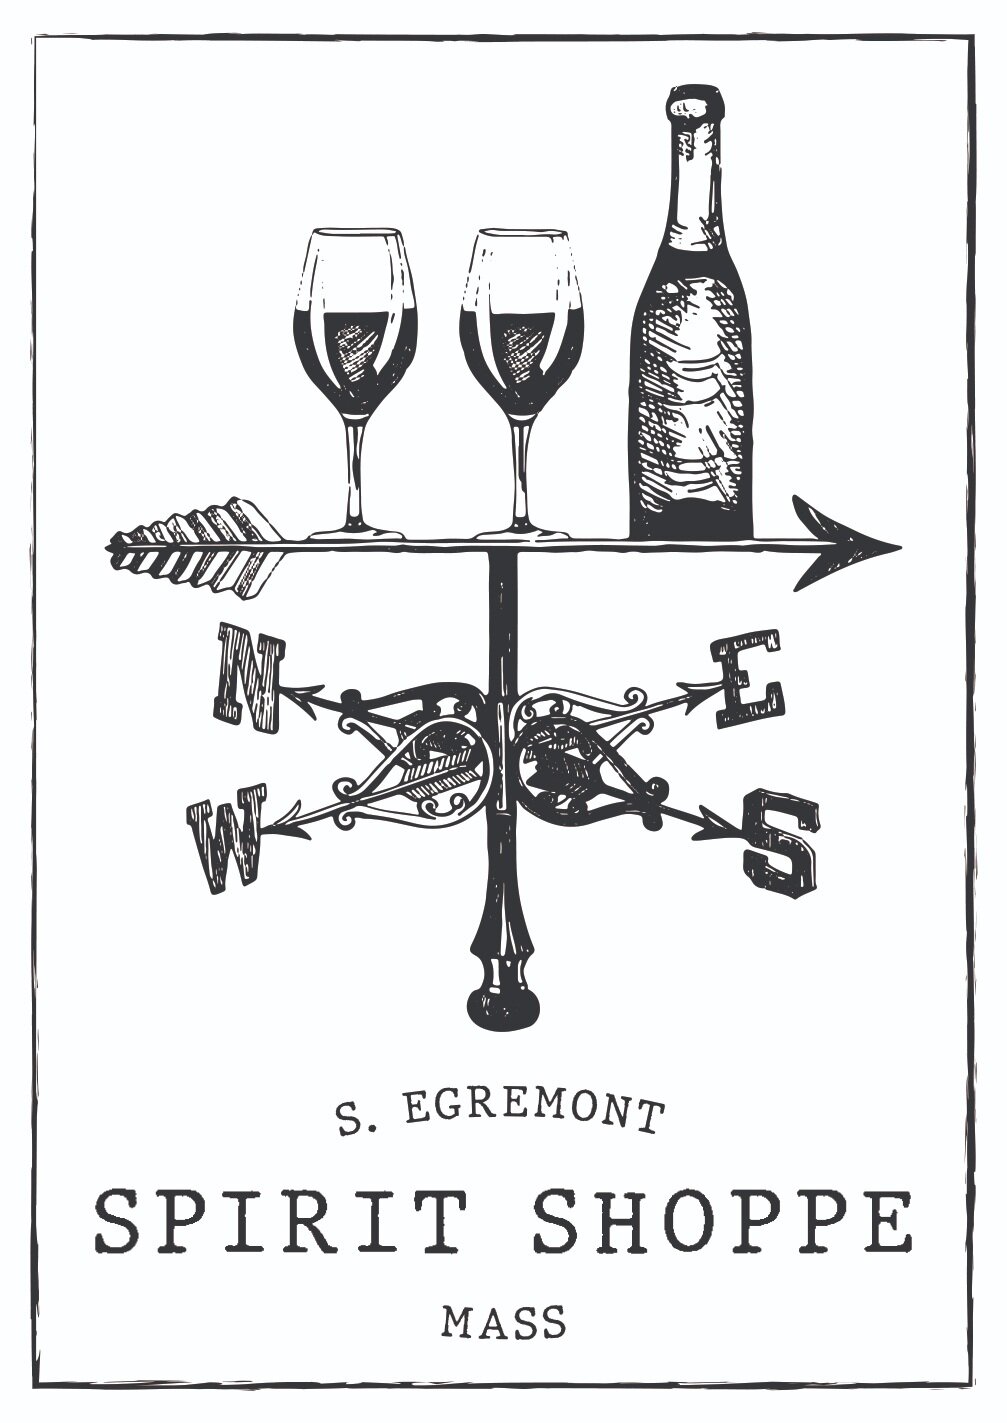 South Egremont Spirit Shoppe 